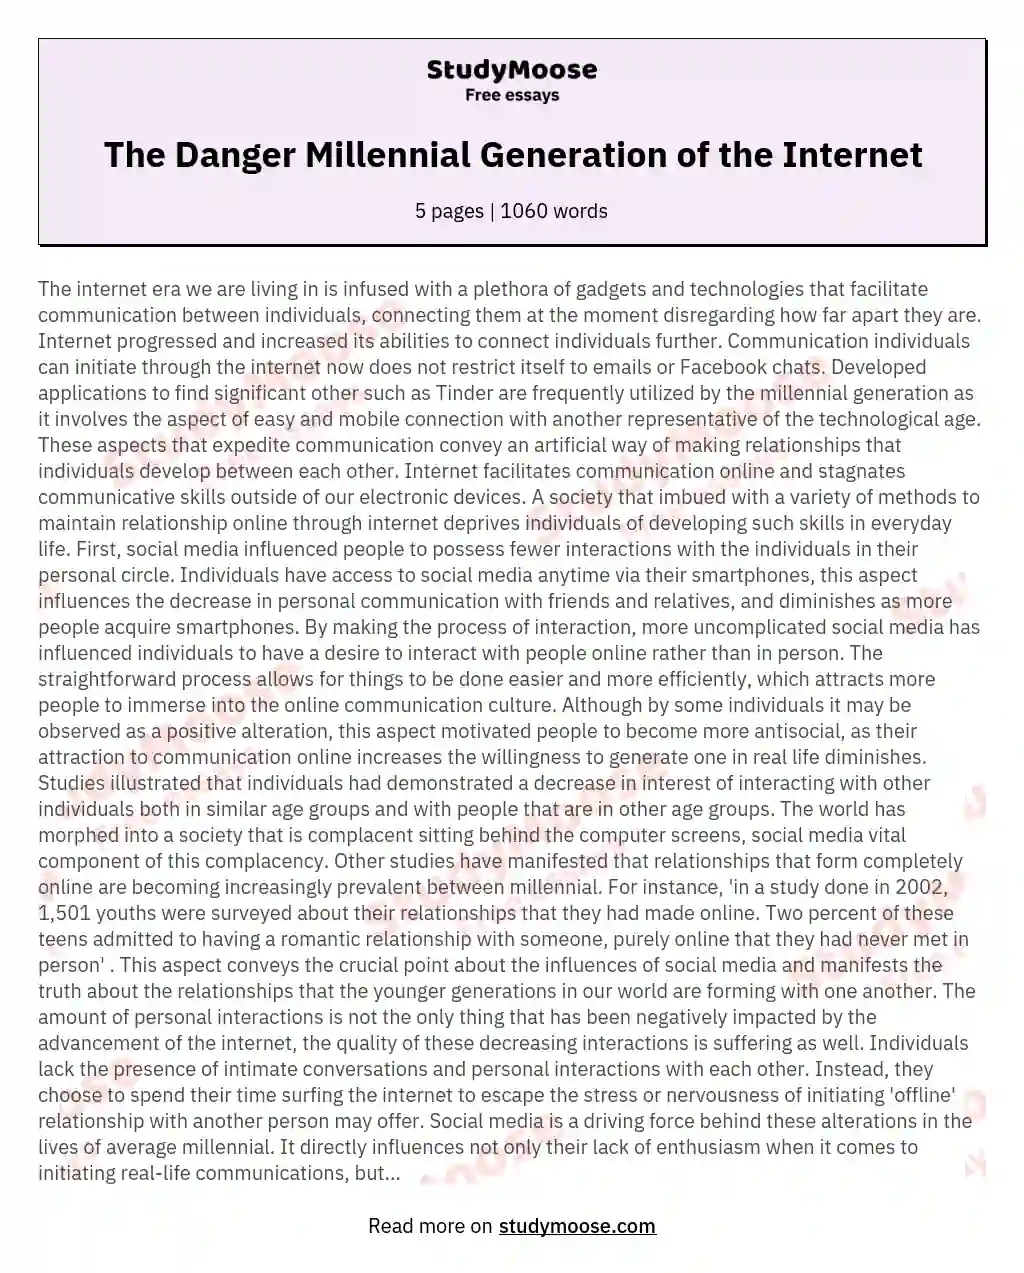 The Danger Millennial Generation of the Internet essay